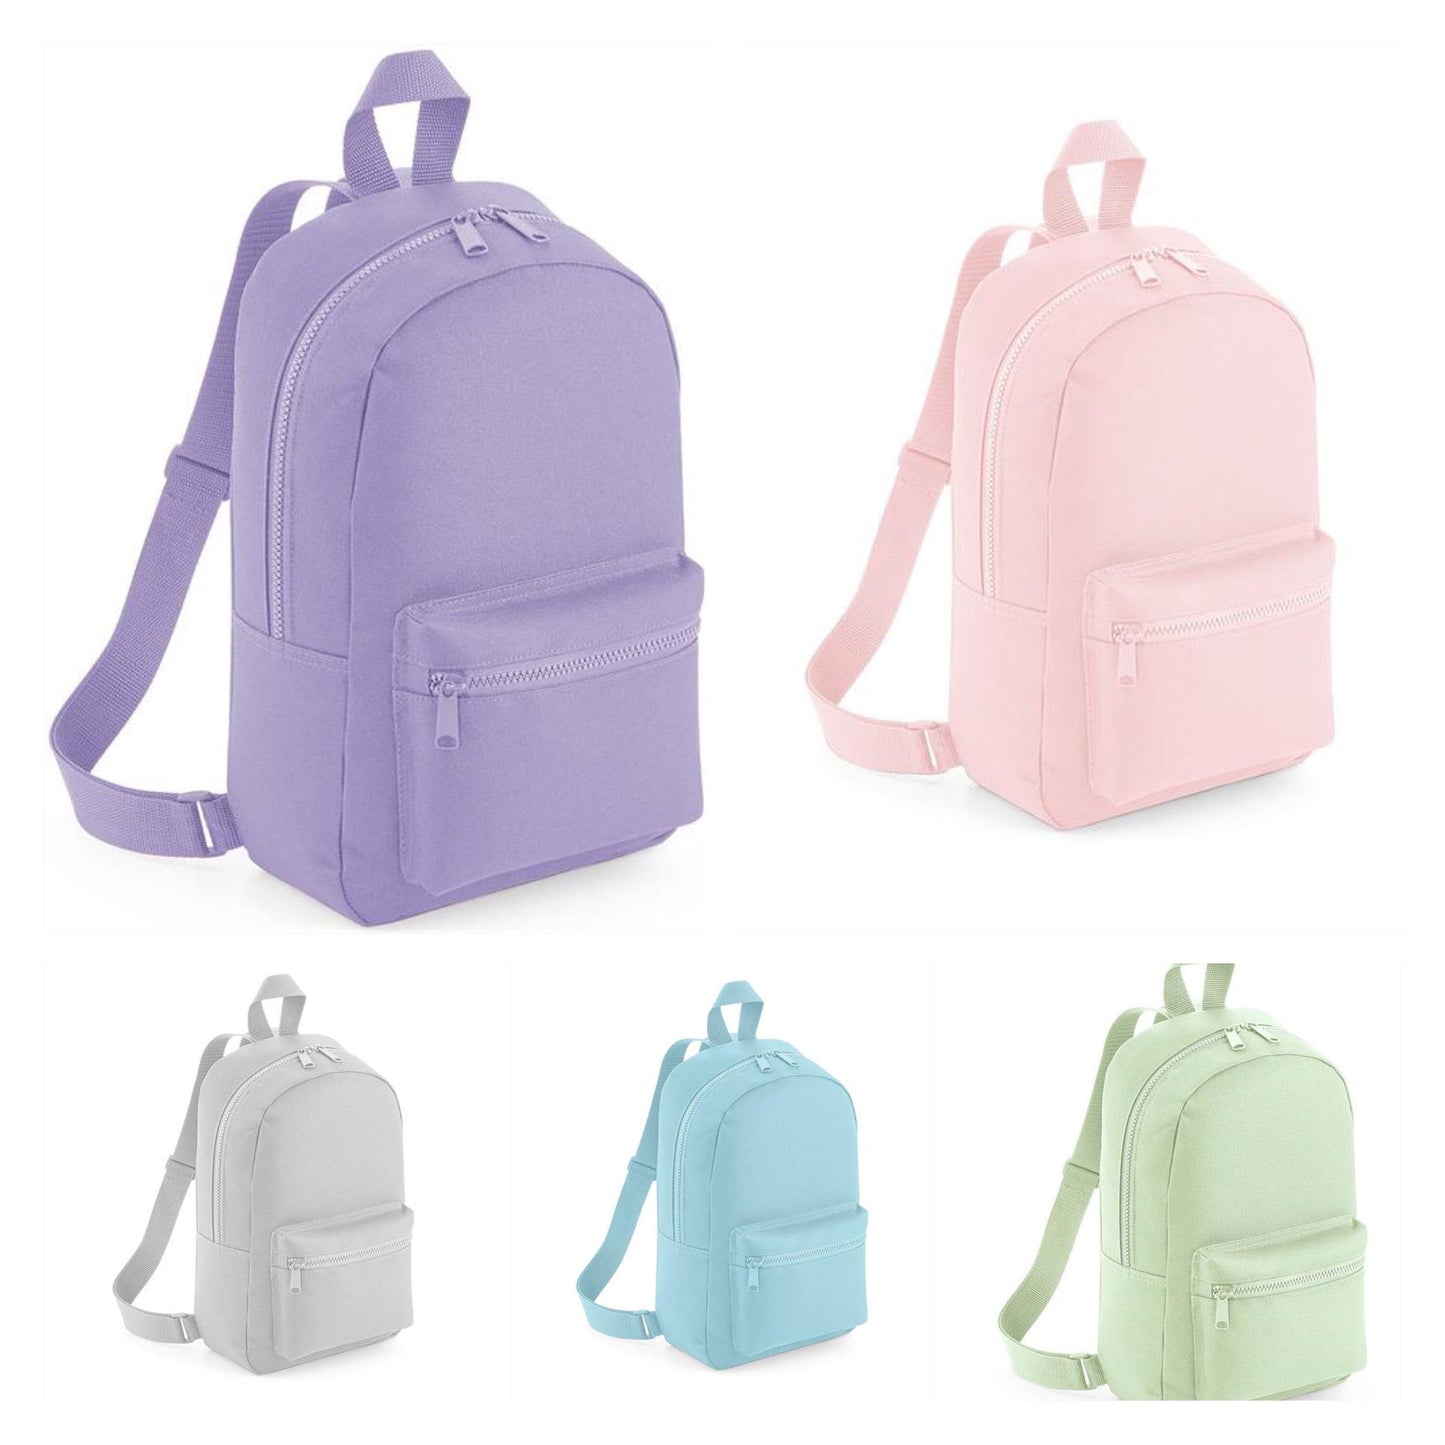 UNICORN TODDLER BACKPACK , Embroidered Personalized Backpack , Back to School Bag, Mama Bag, Name Bag, Nursery Bag , Kids Bag, personalised